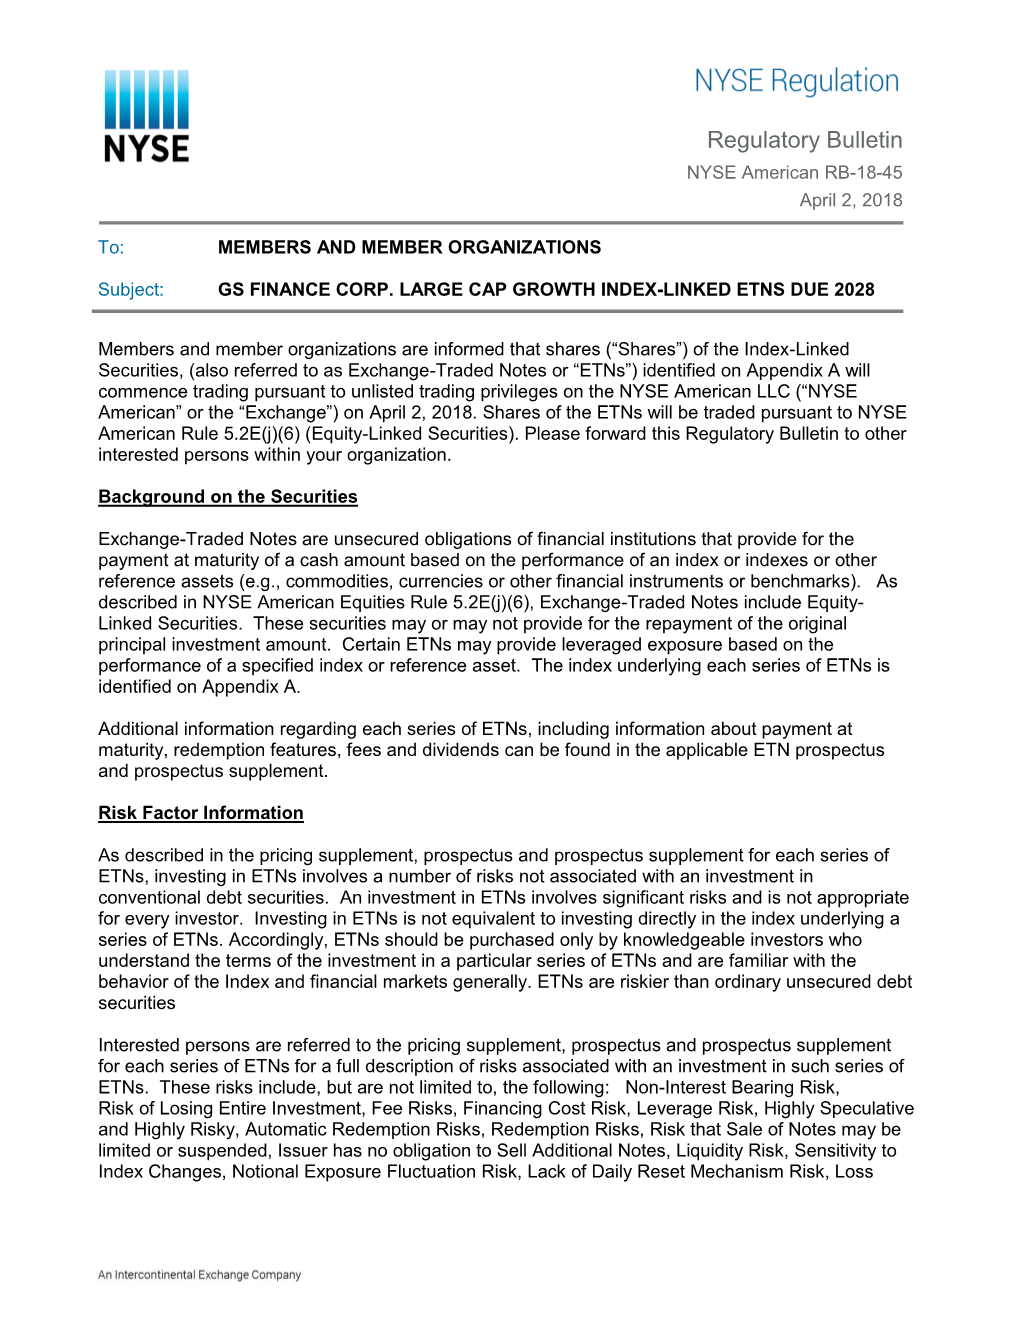 Regulatory Bulletin NYSE American RB-18-45